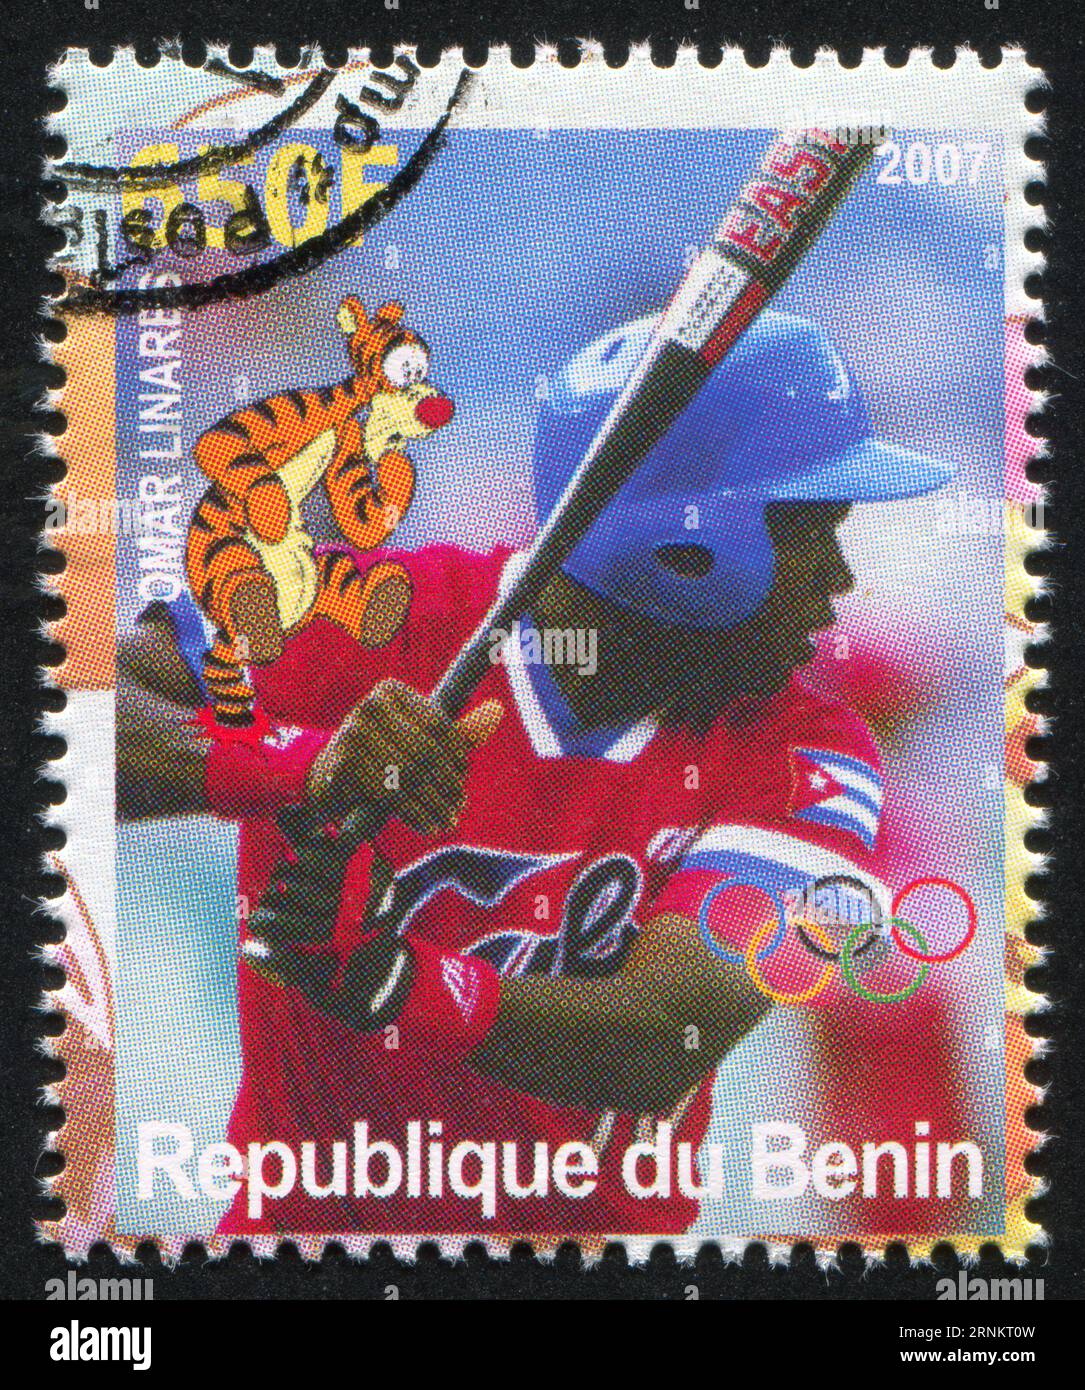 BENIN - CIRCA 2007: stamp printed by Benin, shows Omar Linares, Disney Caharacter and Olympic Rings, circa 2007 Stock Photo